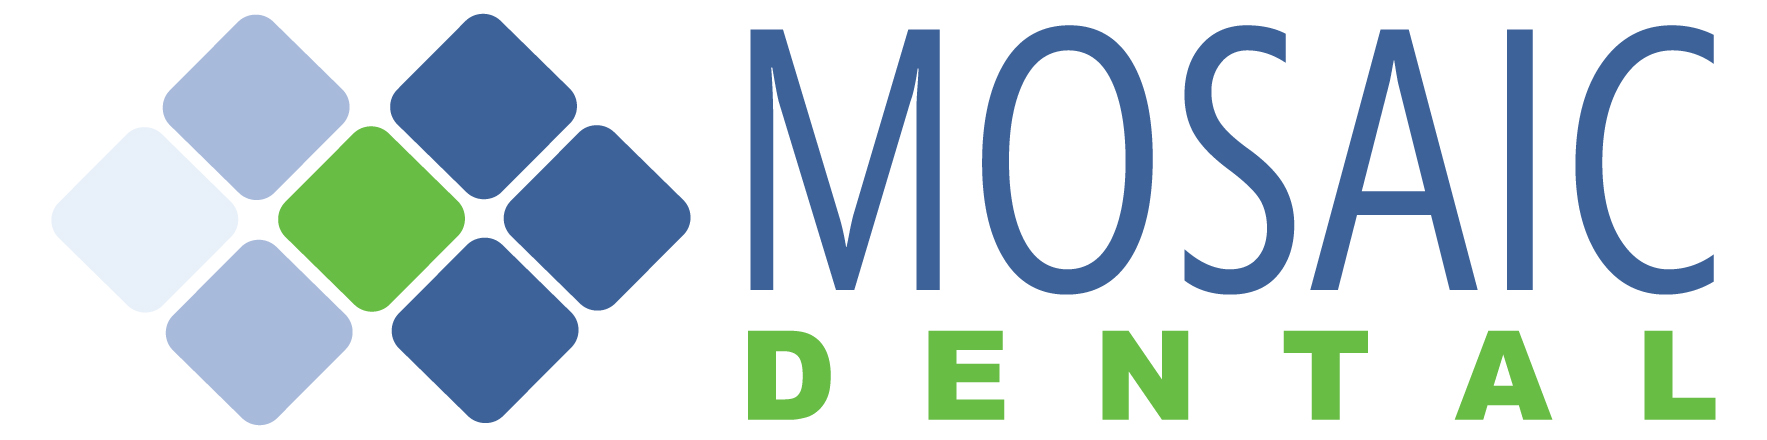 Mosaic Dental Toronto - Logo